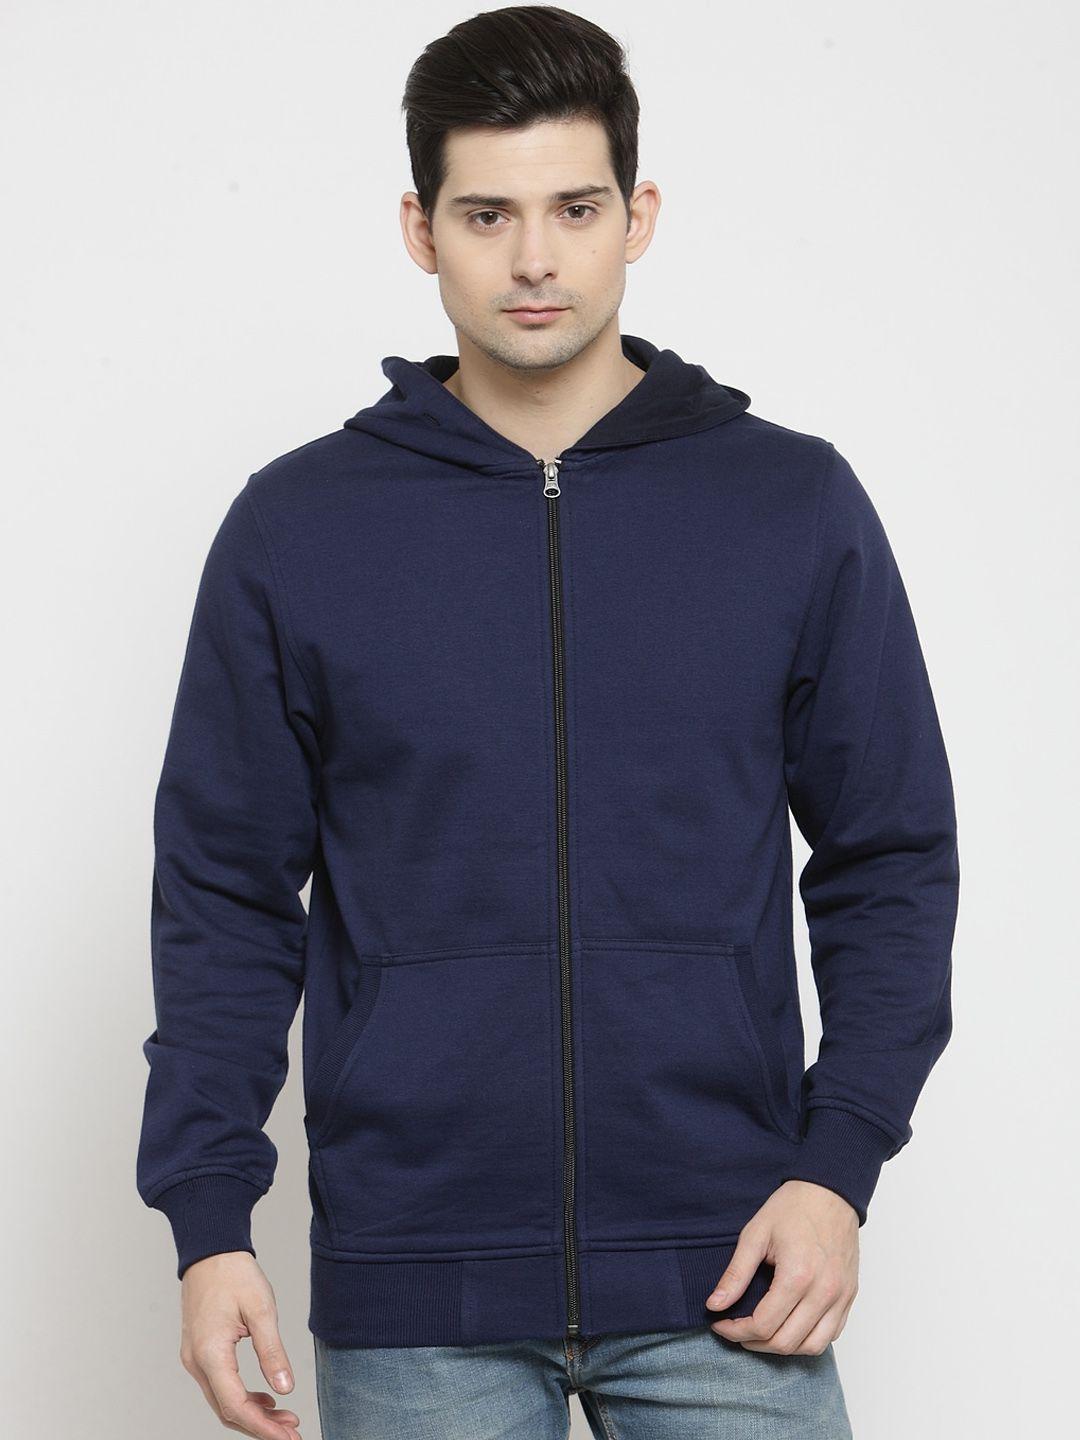 kalt-men-navy-blue-solid-hooded-sweatshirt